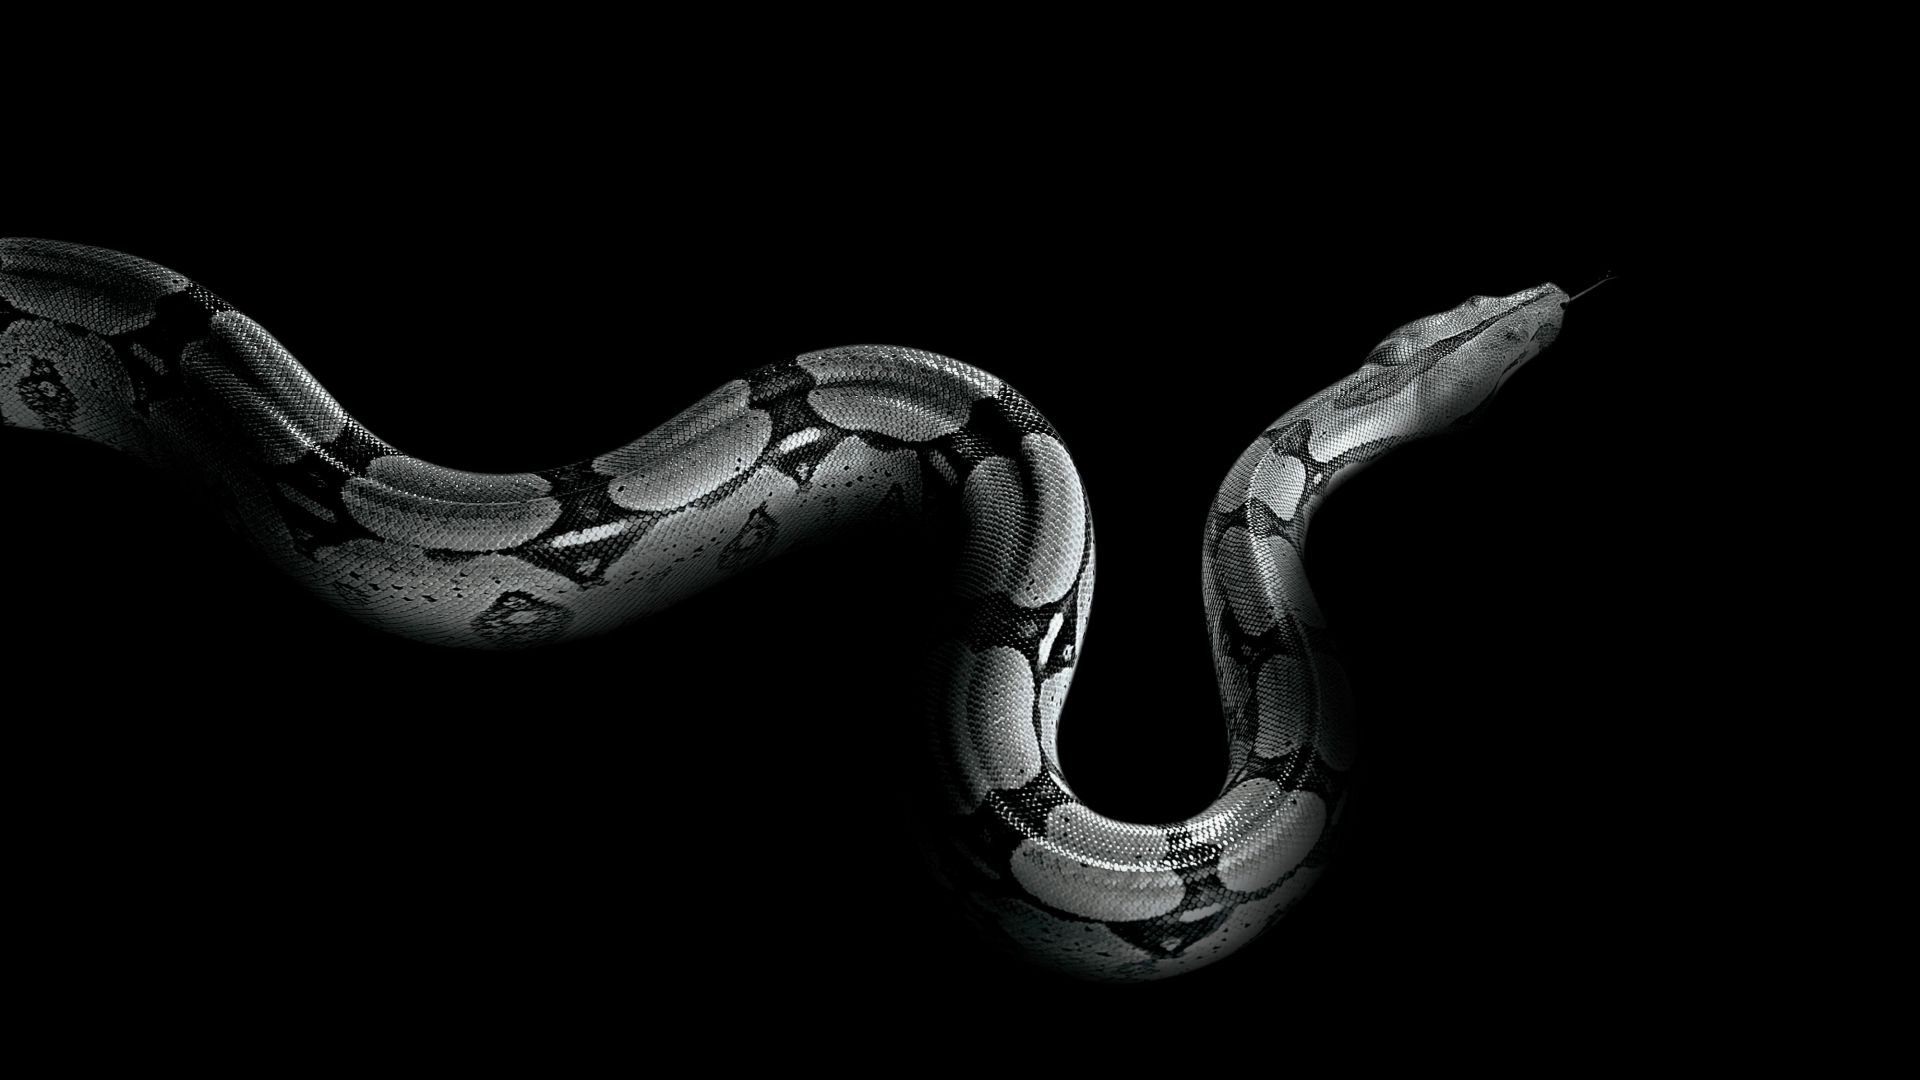 Питон, змея, Python, snake (horizontal)